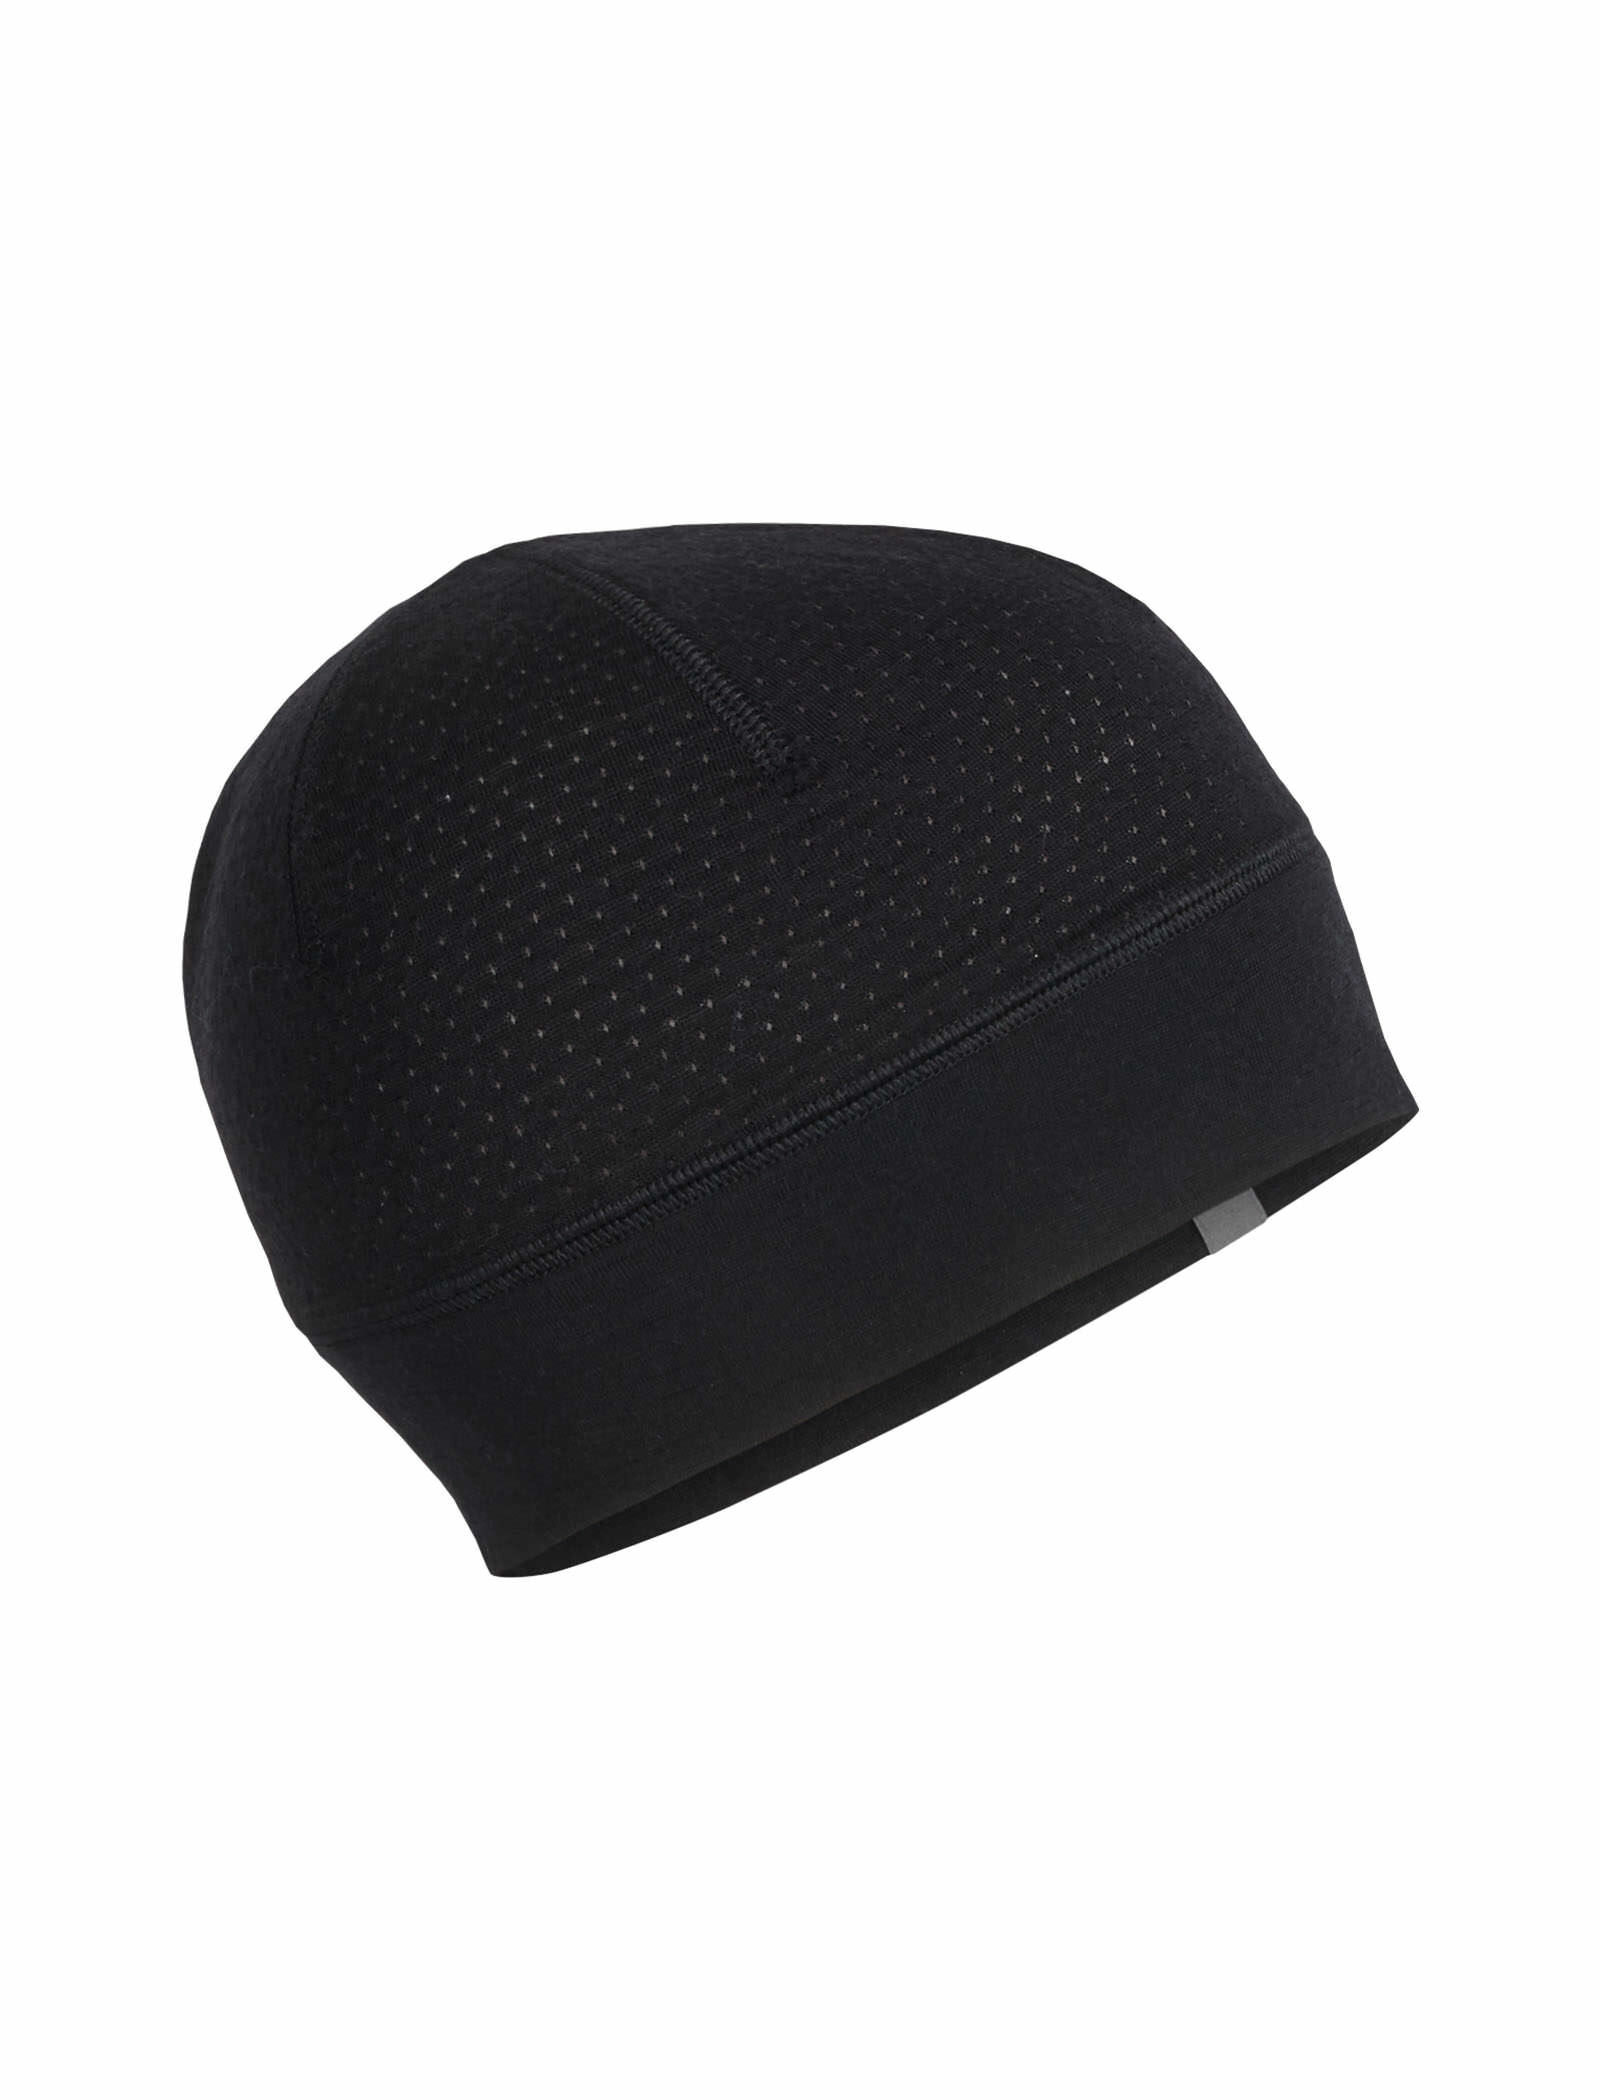 One size Icebreaker Merino Zone Beanie Cold-Weather-Hats Black